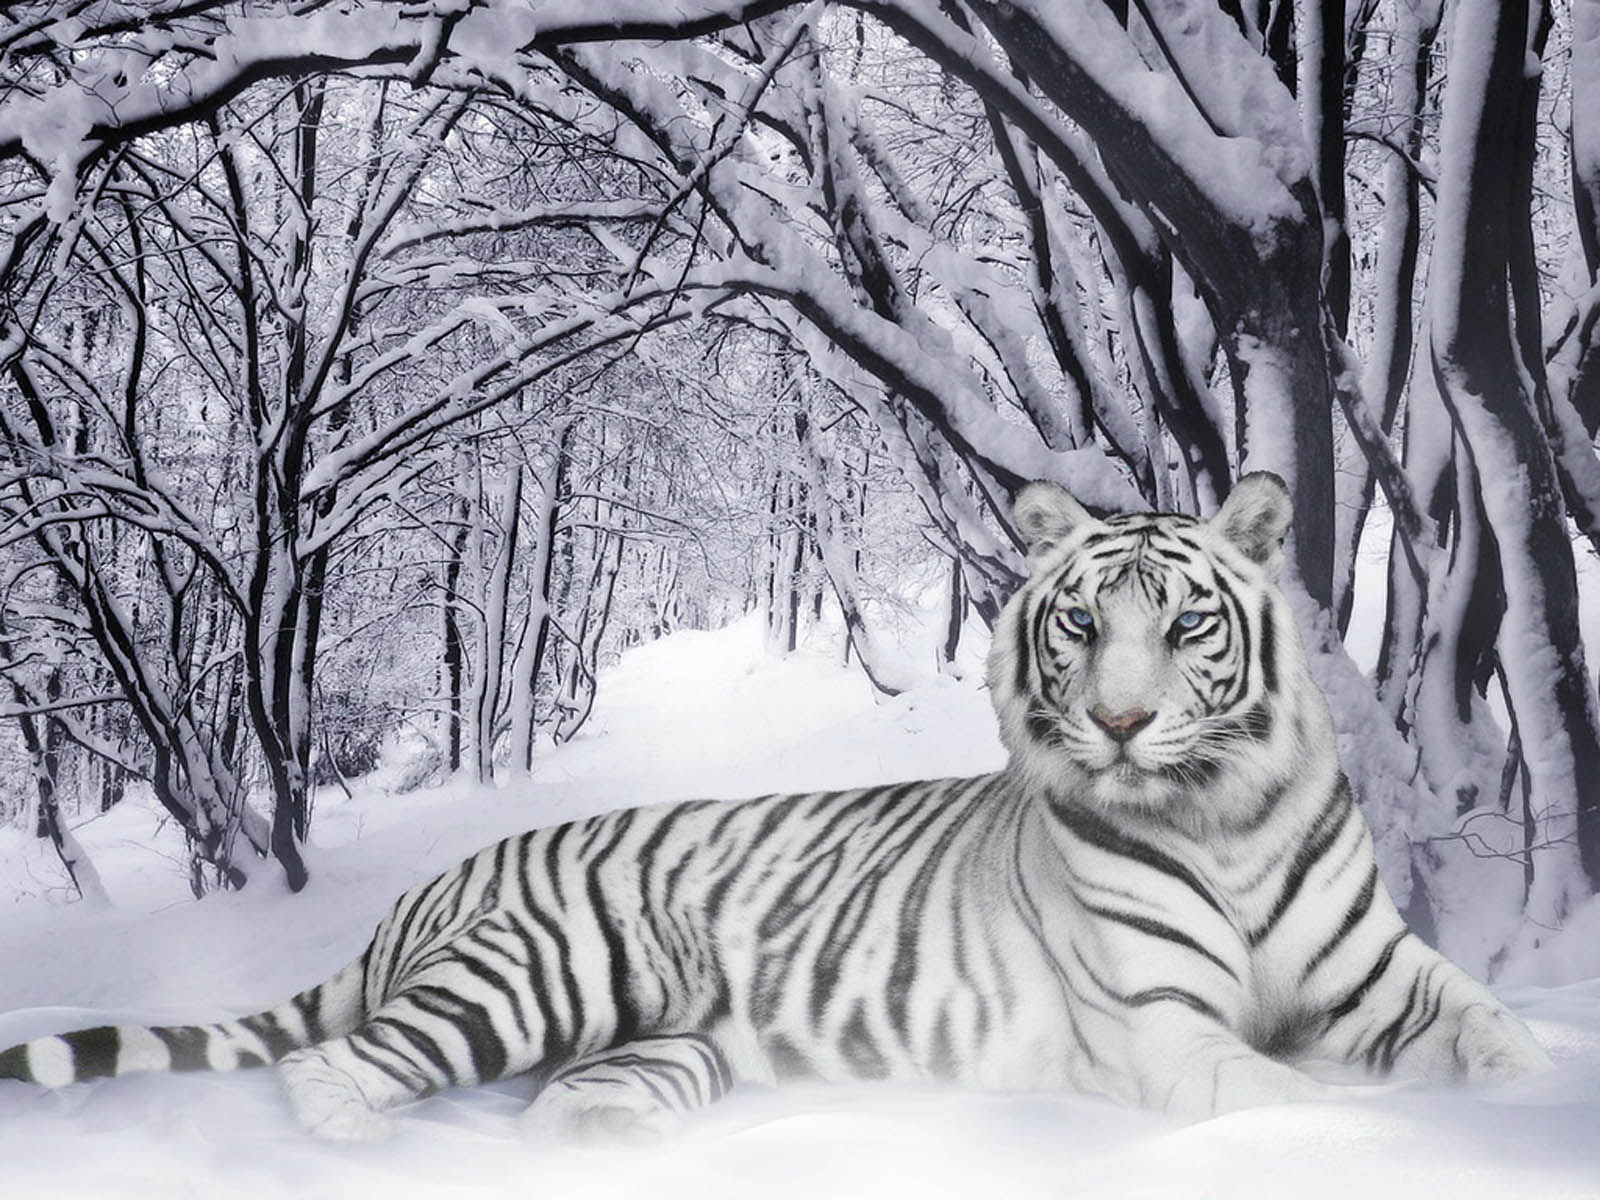 watching the Tiger 3D Wallpapers Tiger 3D Desktop Wallpapers Tiger